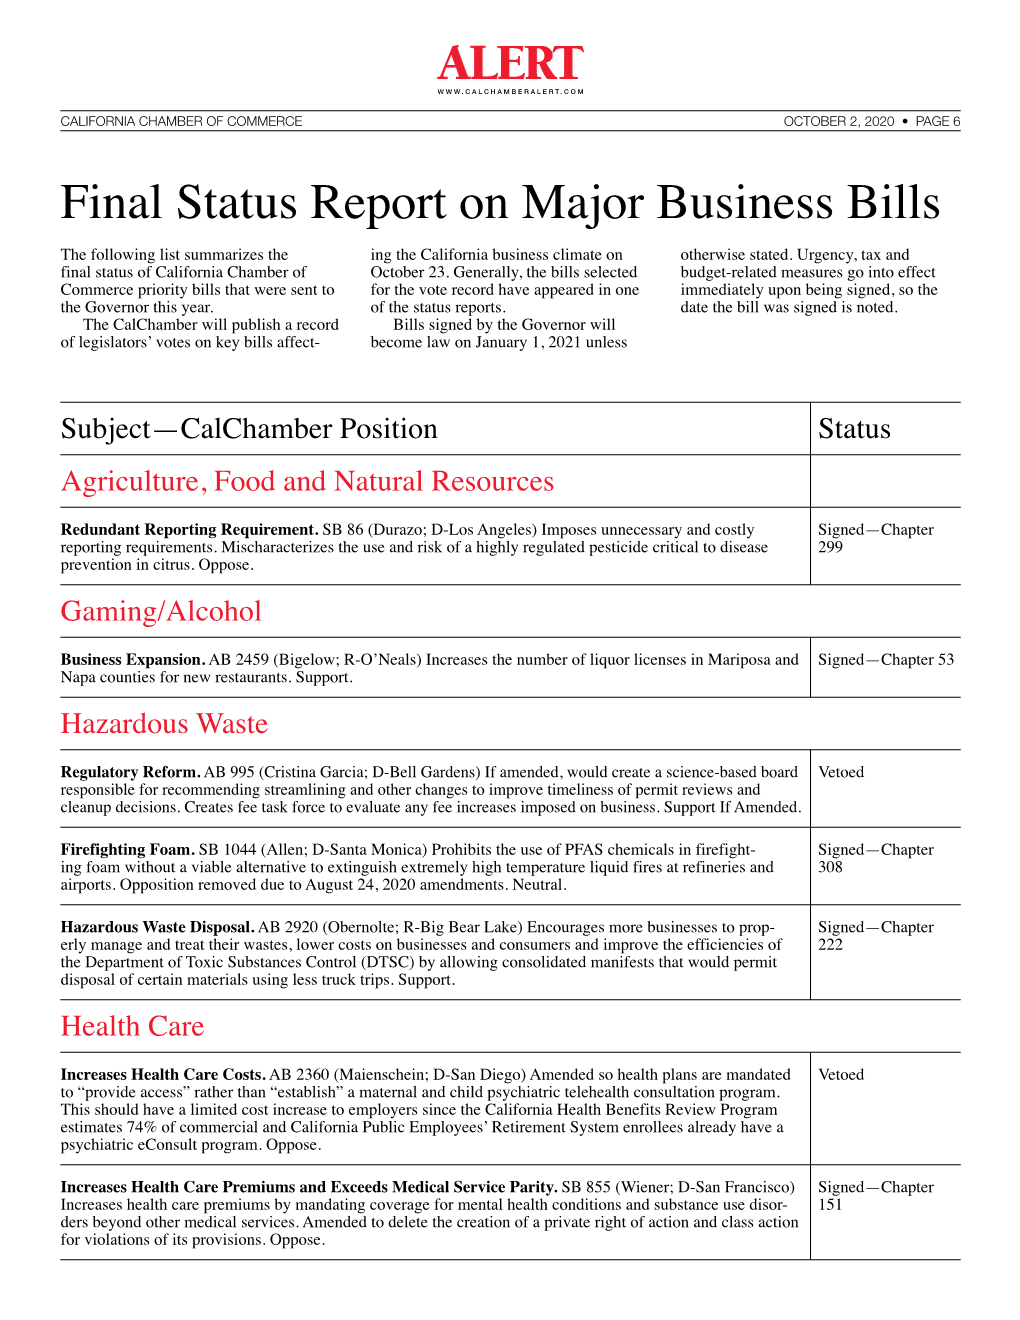 2020 Final Status Report on Major Business Bills